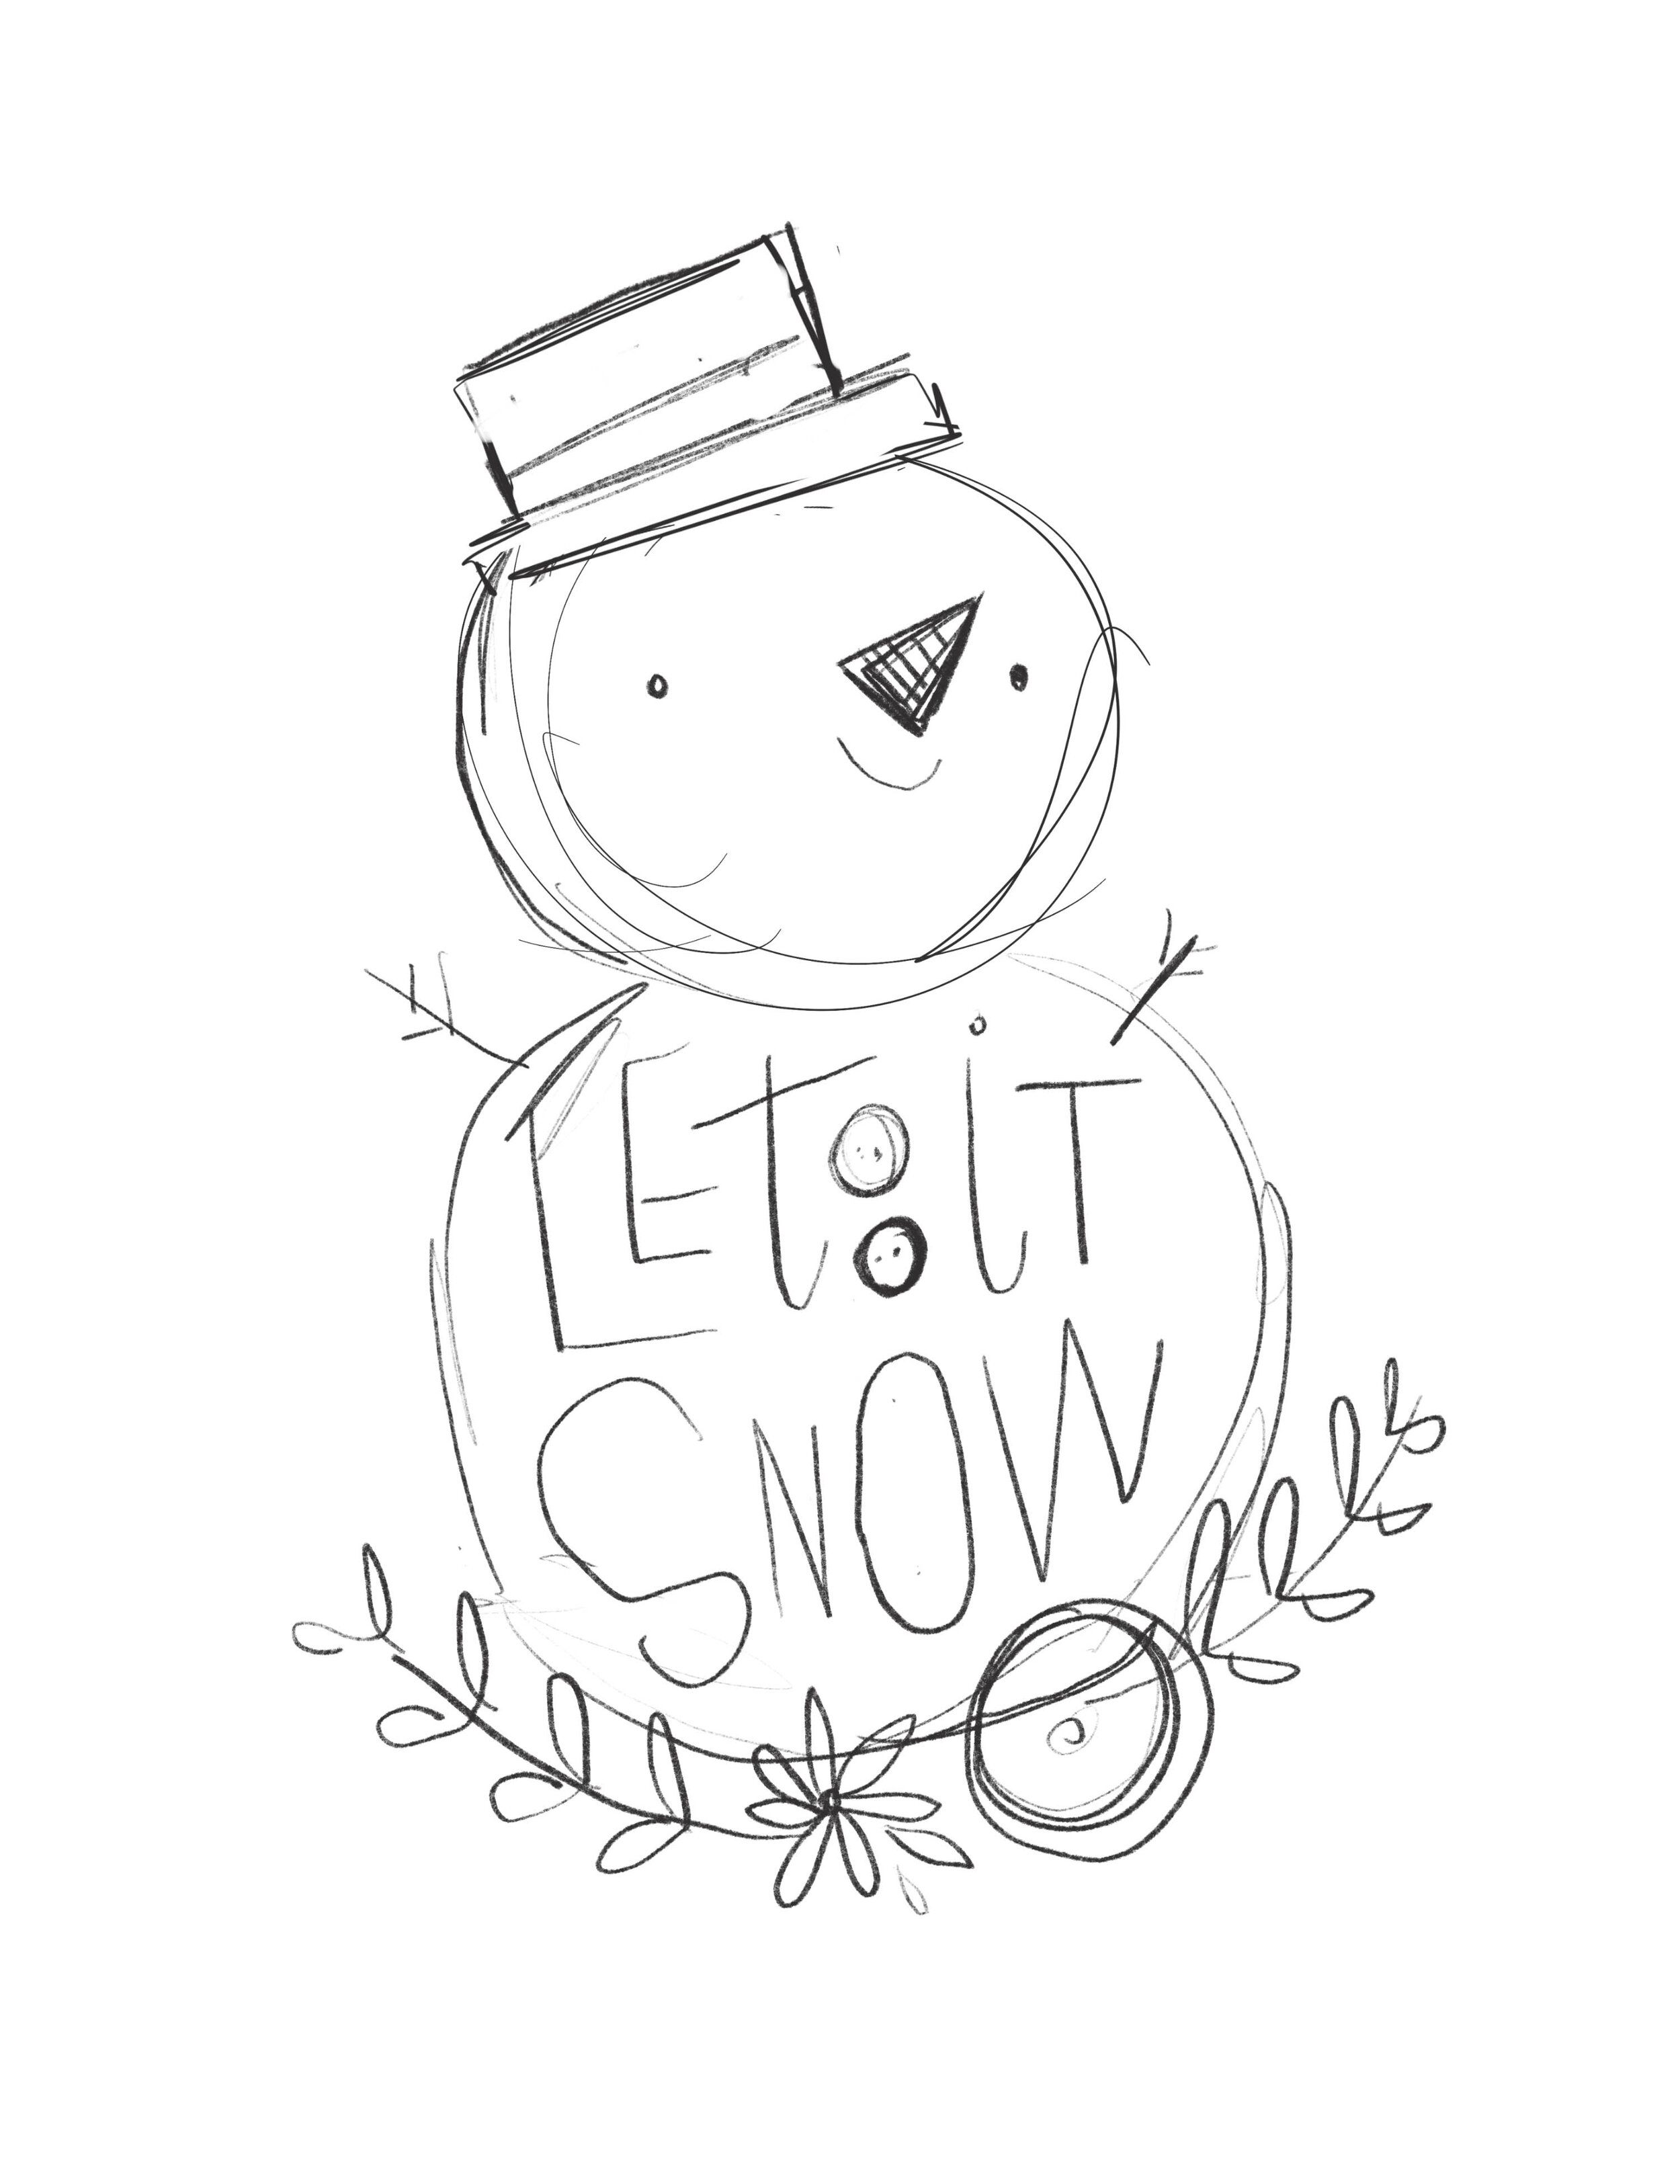 snowman sketch.jpg